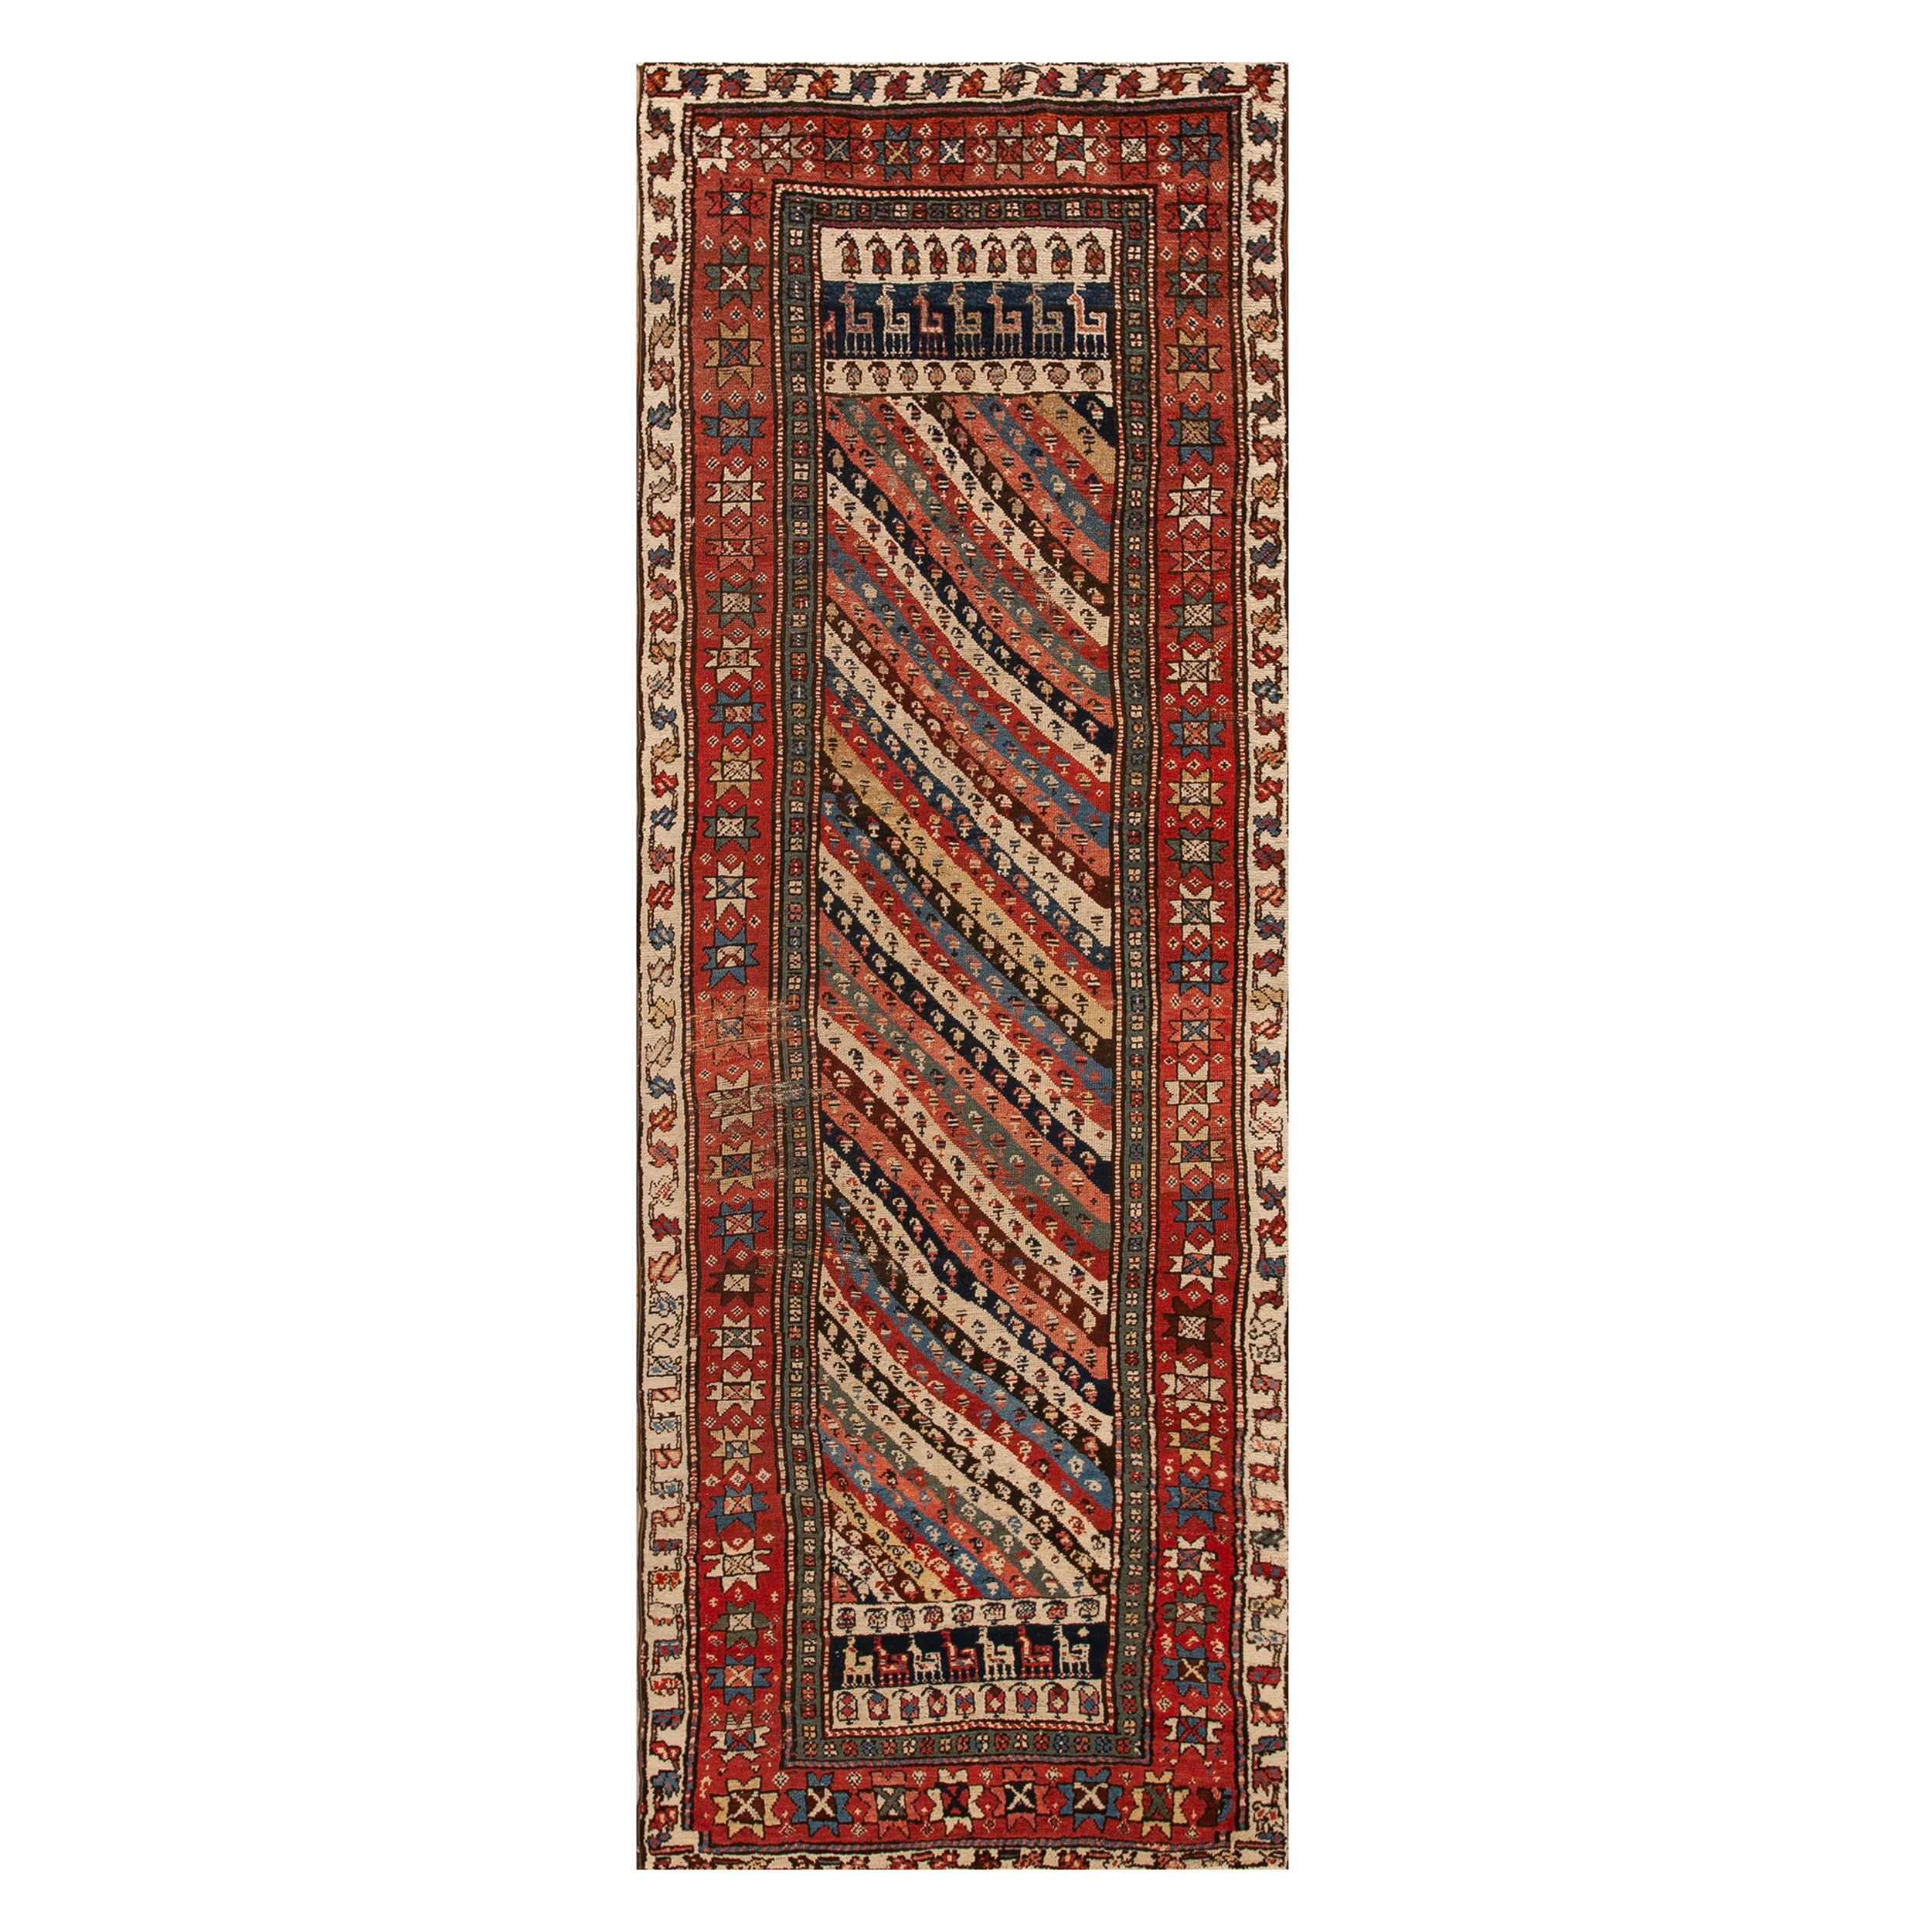 19th Century N.W. Persian Carpet ( 3'6'' x 10' - 107 x 305 )